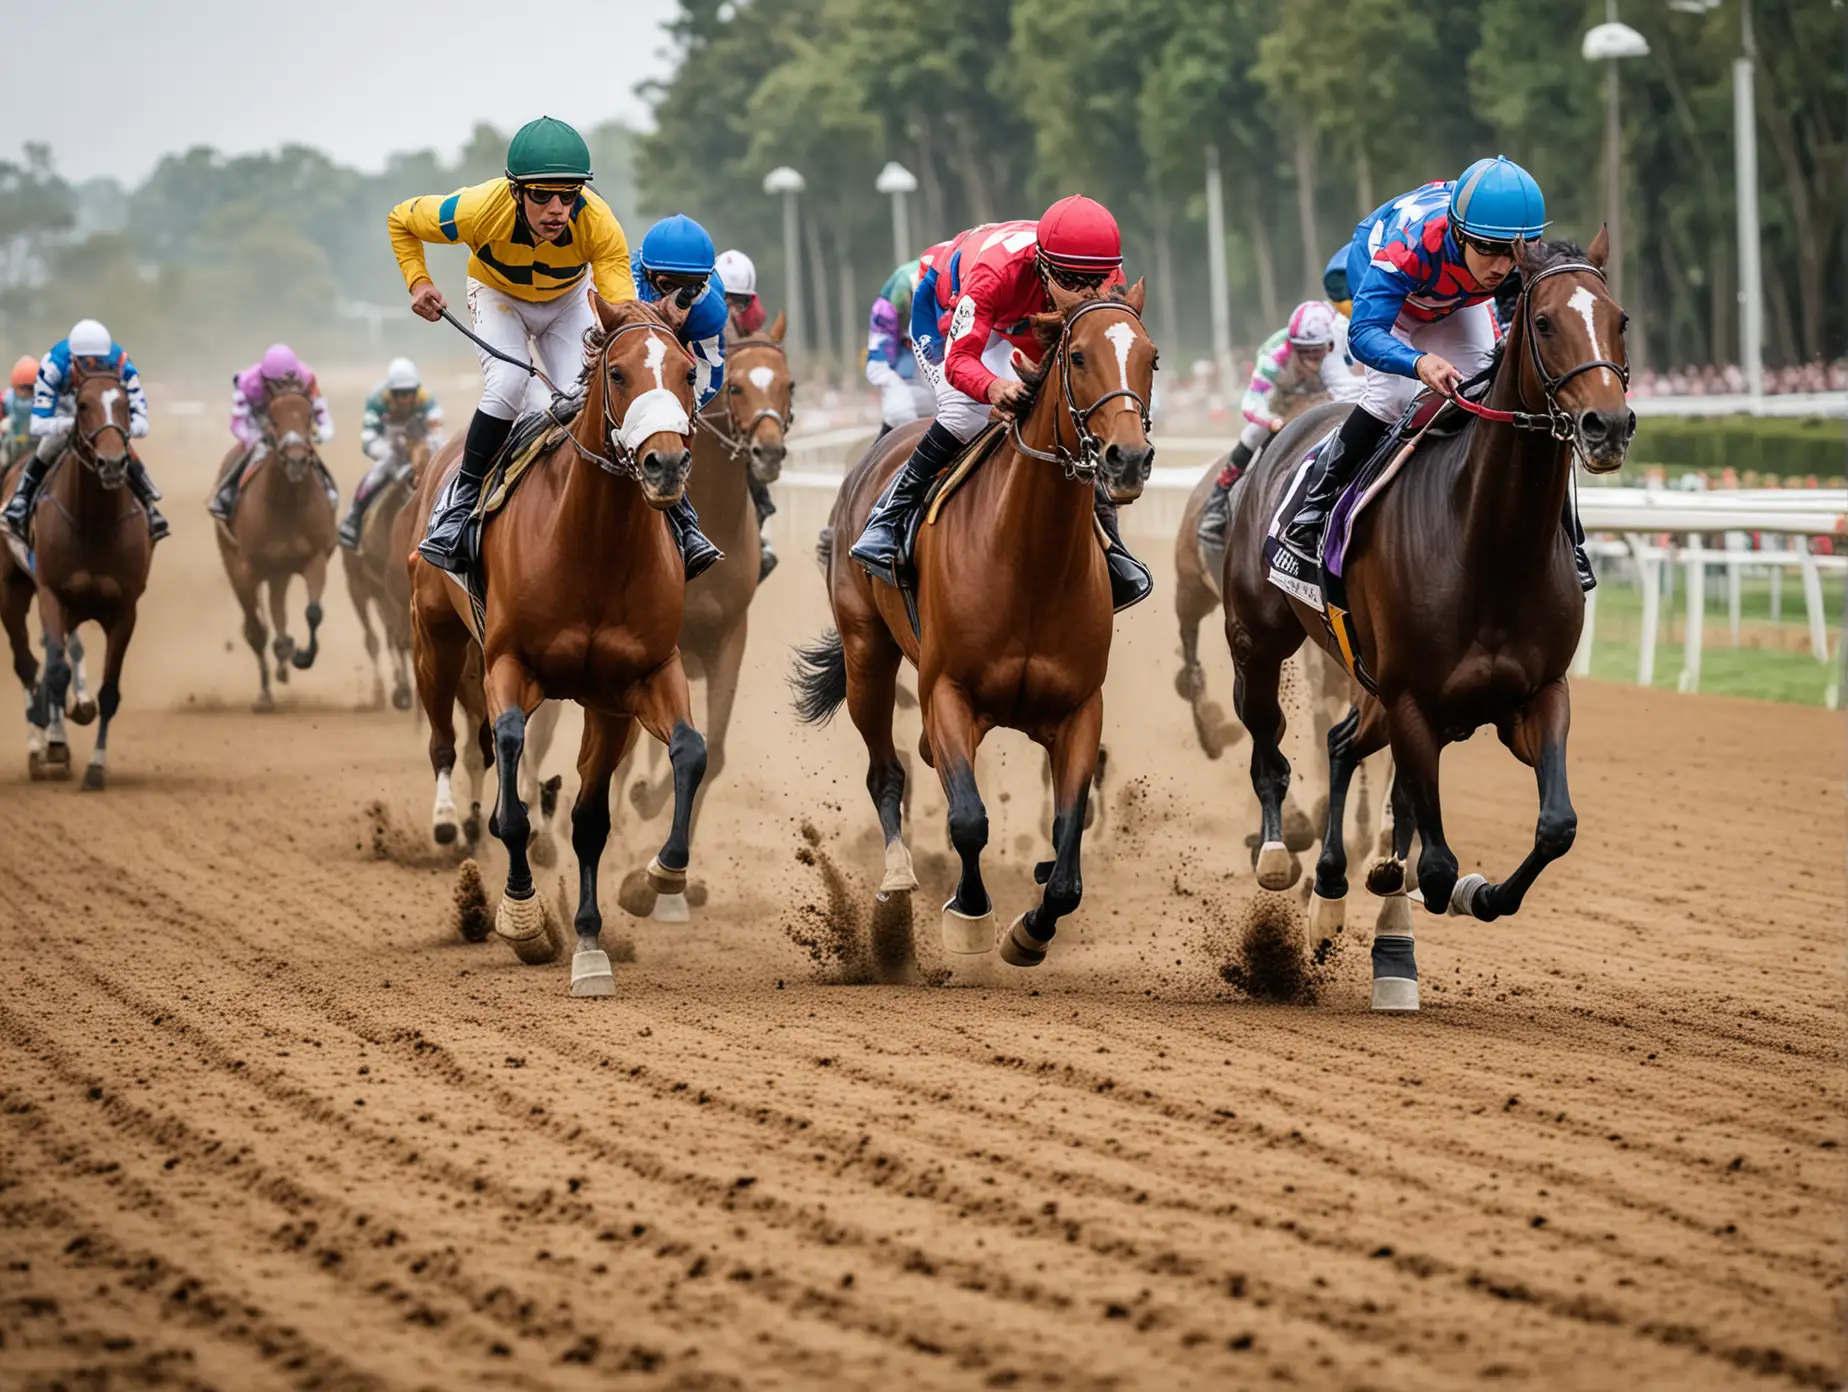 Dynamic Horse Racing Scene Vibrant Jockeys and Powerful Horses